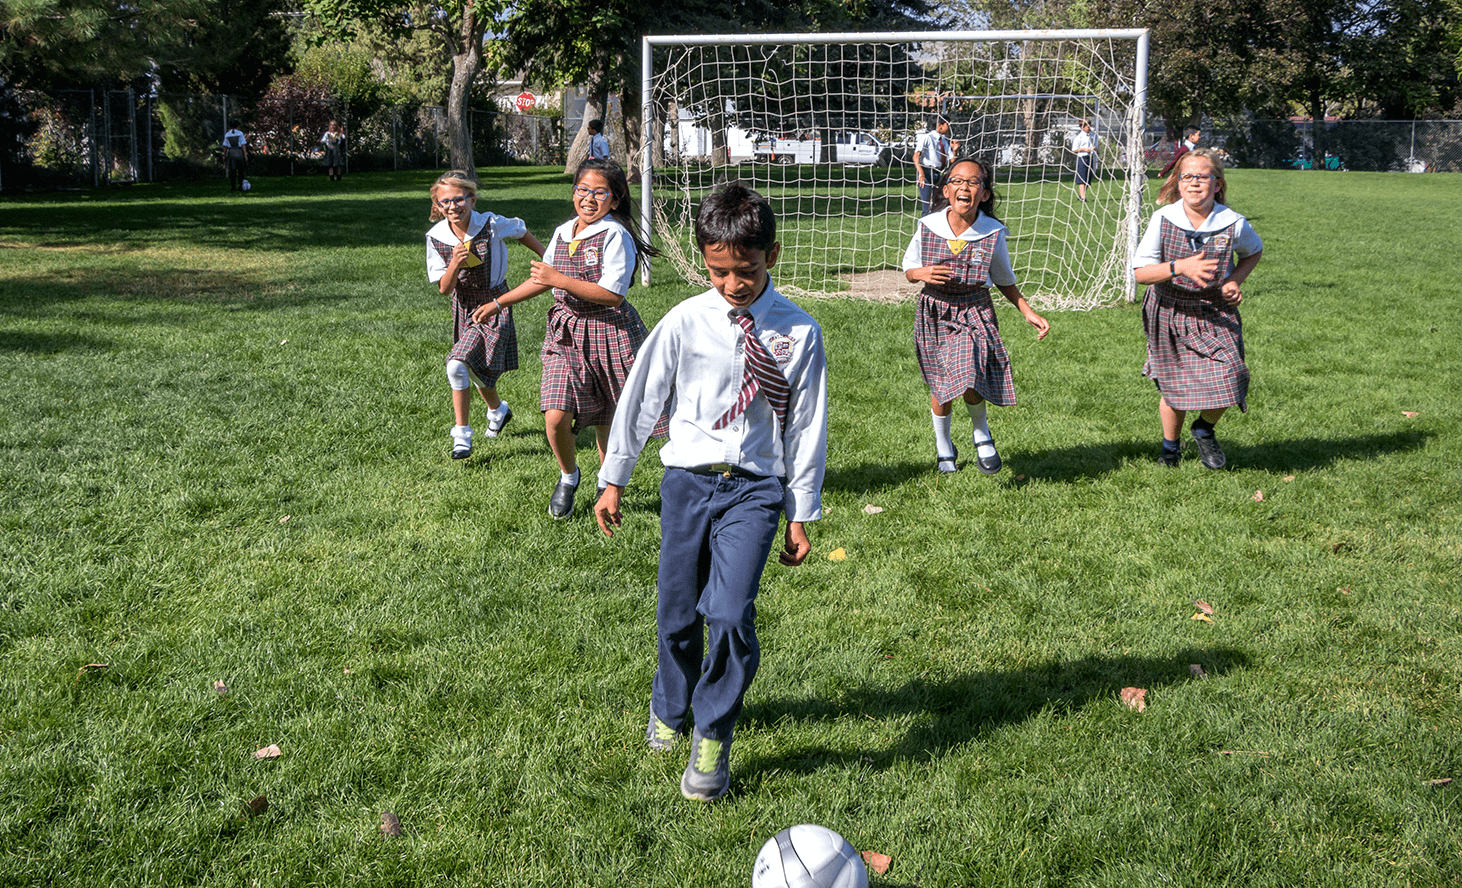 Playground Soccer | Challenger School - Sandy | Private School In Sandy, Utah